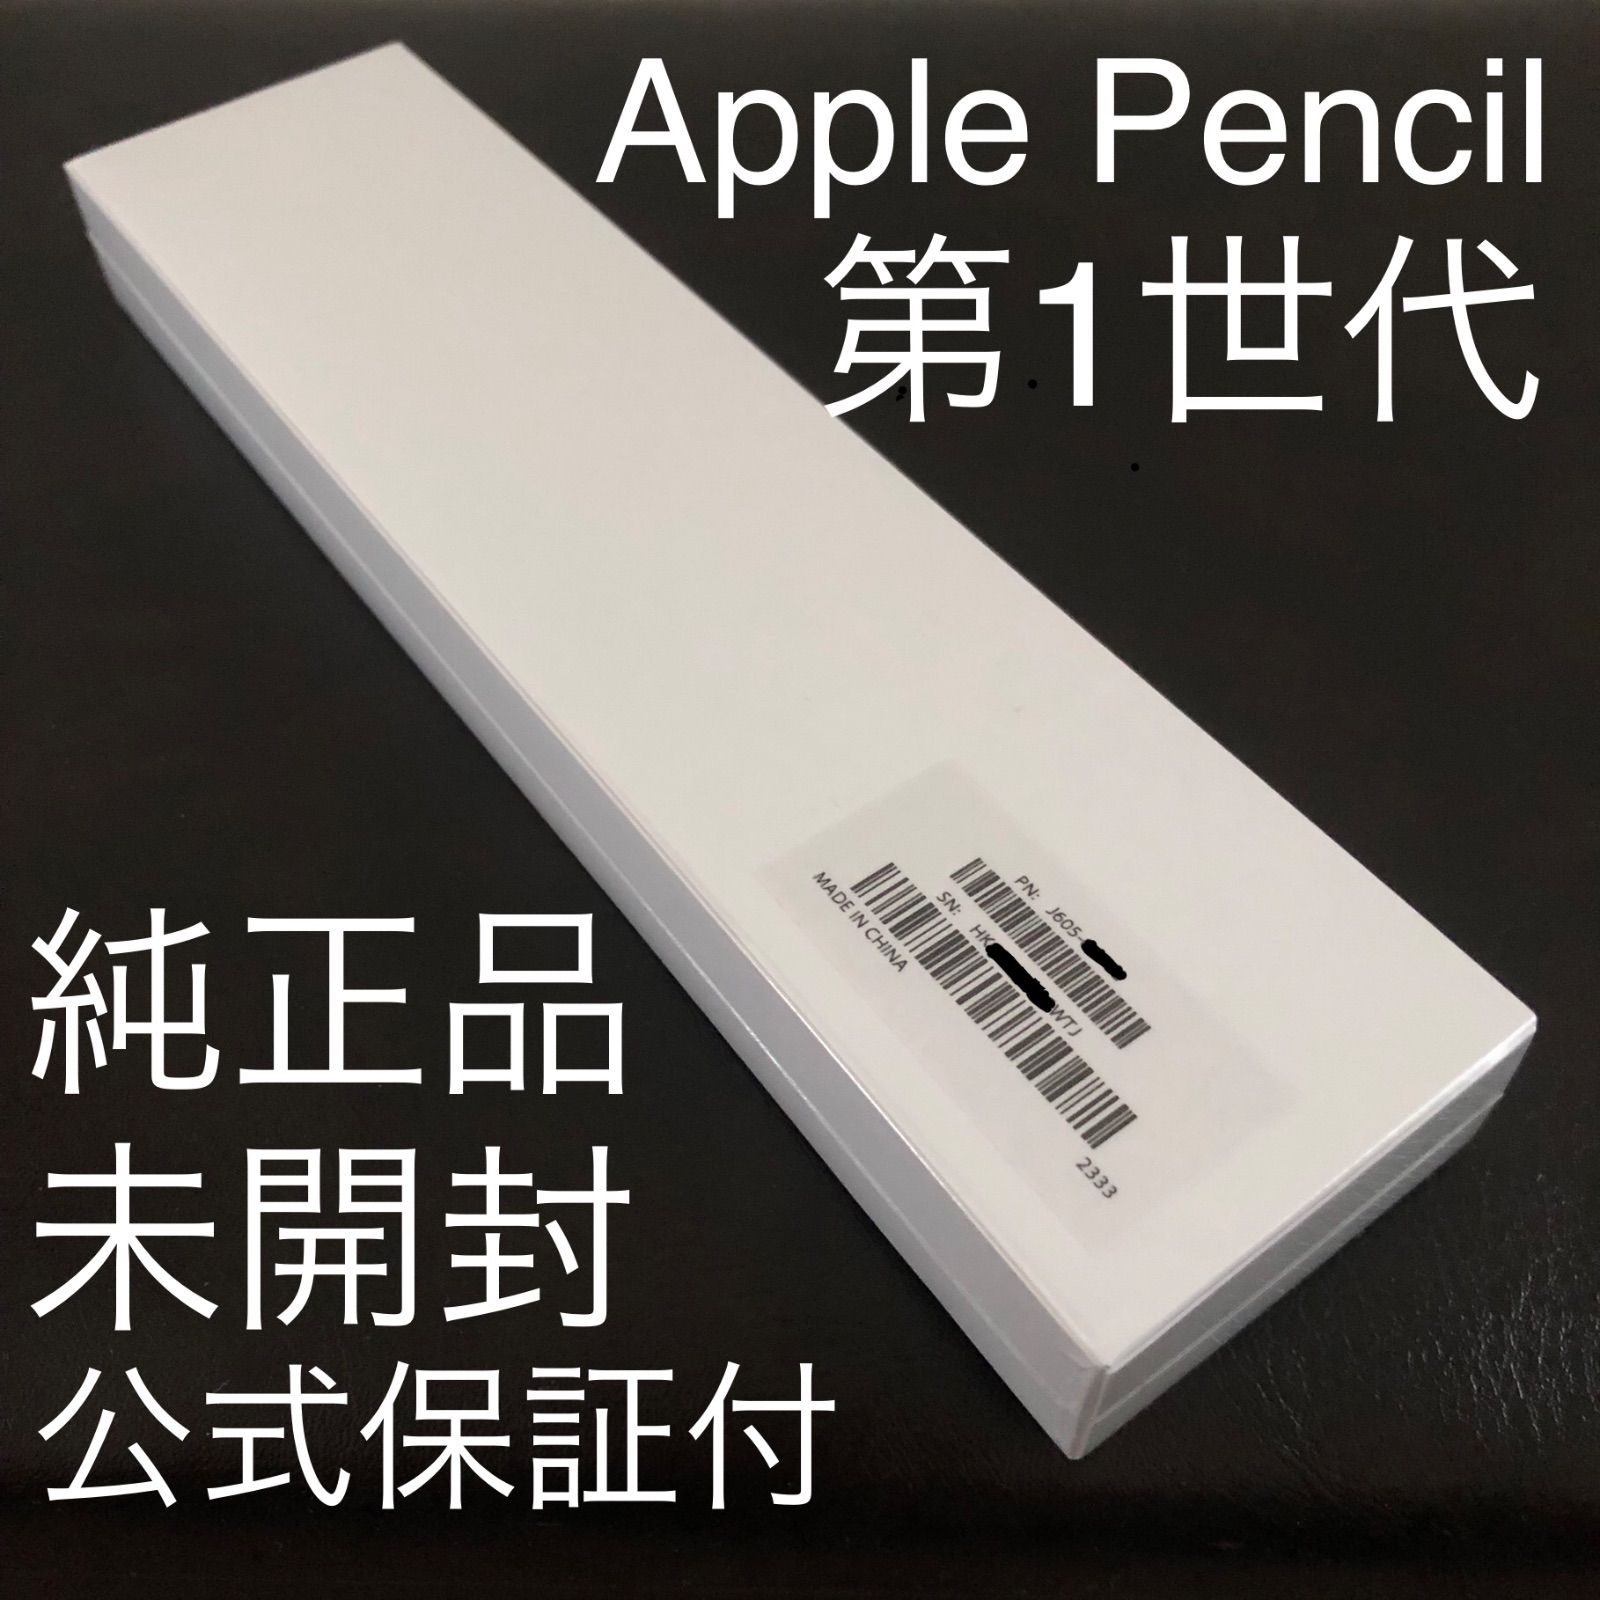 ApplePencil 第1世代 新品 未開封 アップルペンシル - iPadアクセサリー